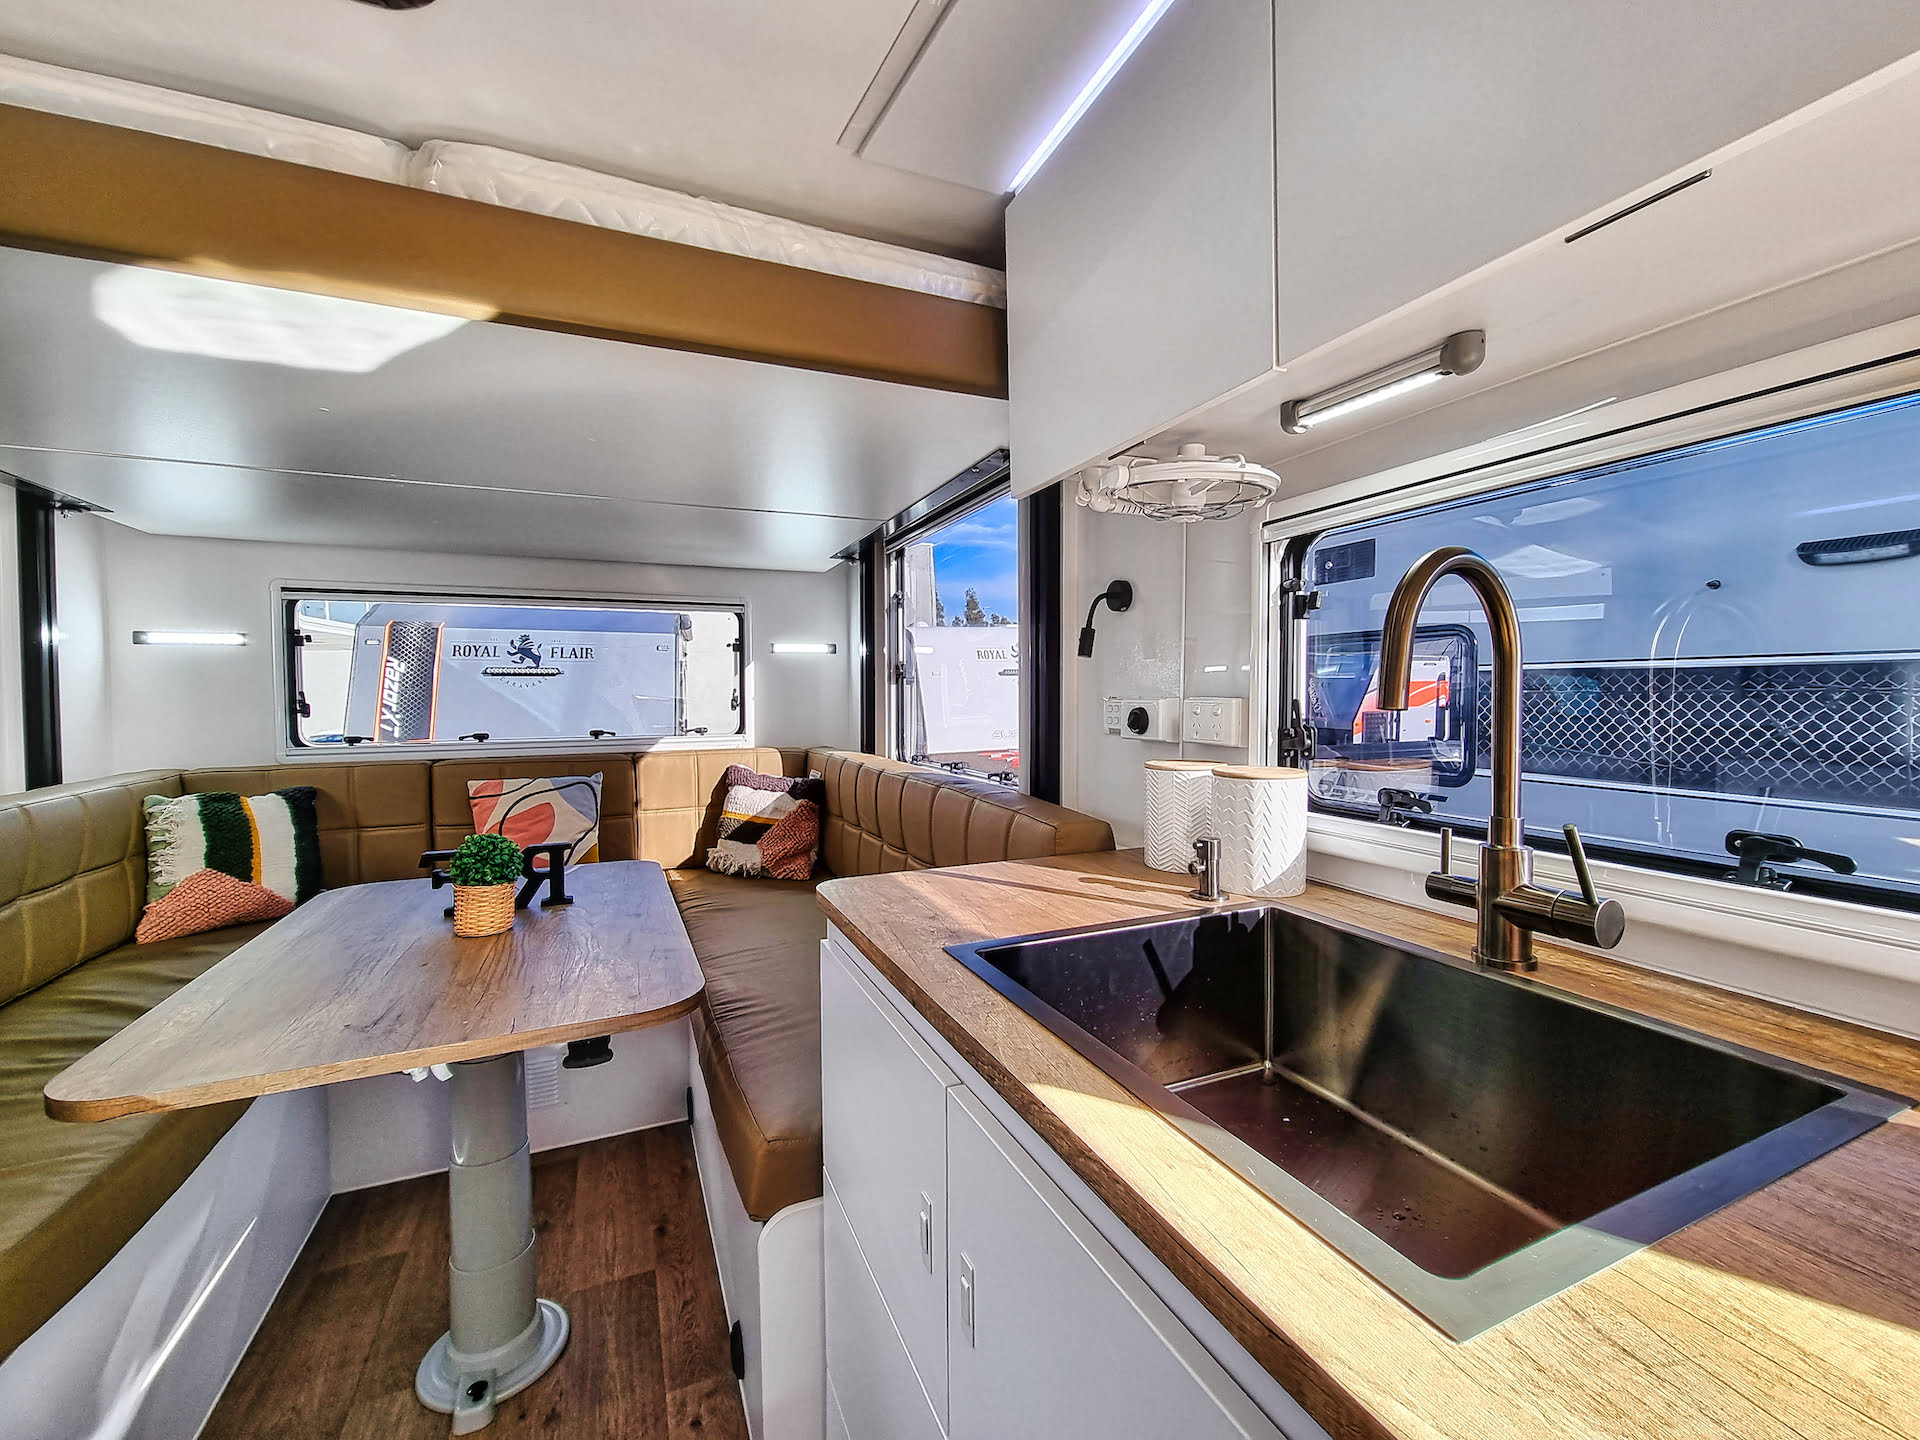 The Aussiemate caravan's interior features a versatile dropdown bed, merging luxury with smart design